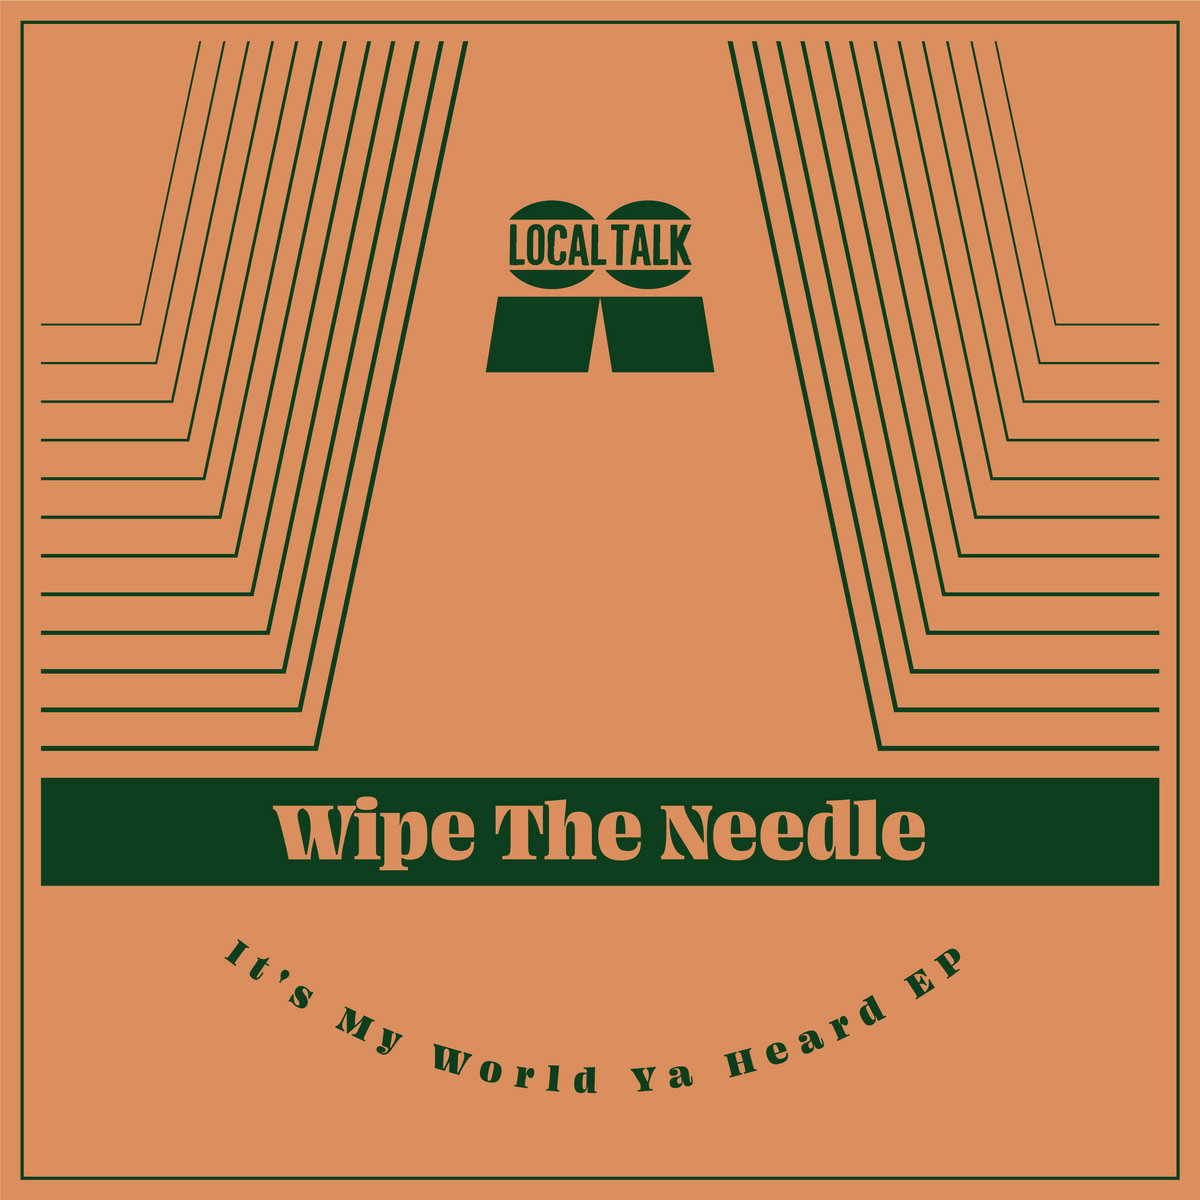 Wipe The Needle - It's My World Ya Heard EP [Local Talk]